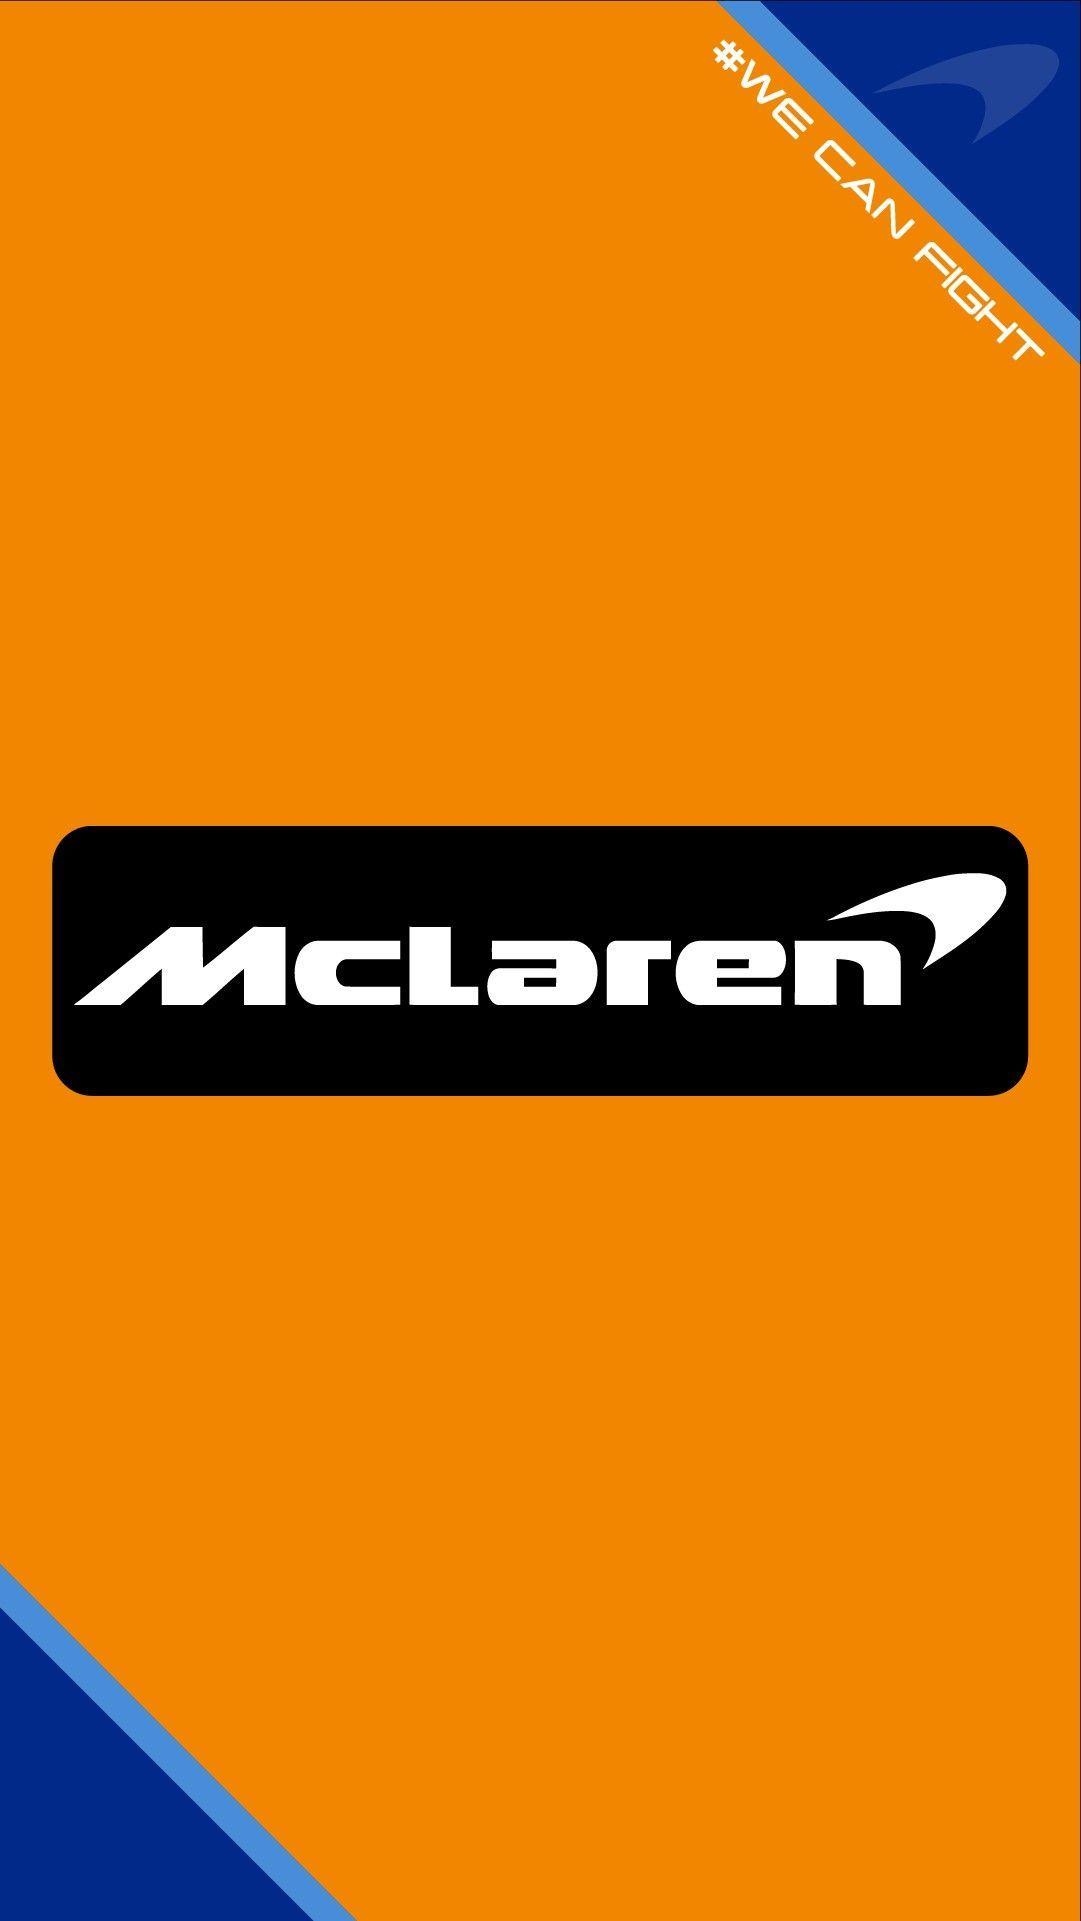 McLaren F1 2018 Logo - Mclaren f1 team wallpaper 2018 #mclaren #formula1 #f1 #renault ...